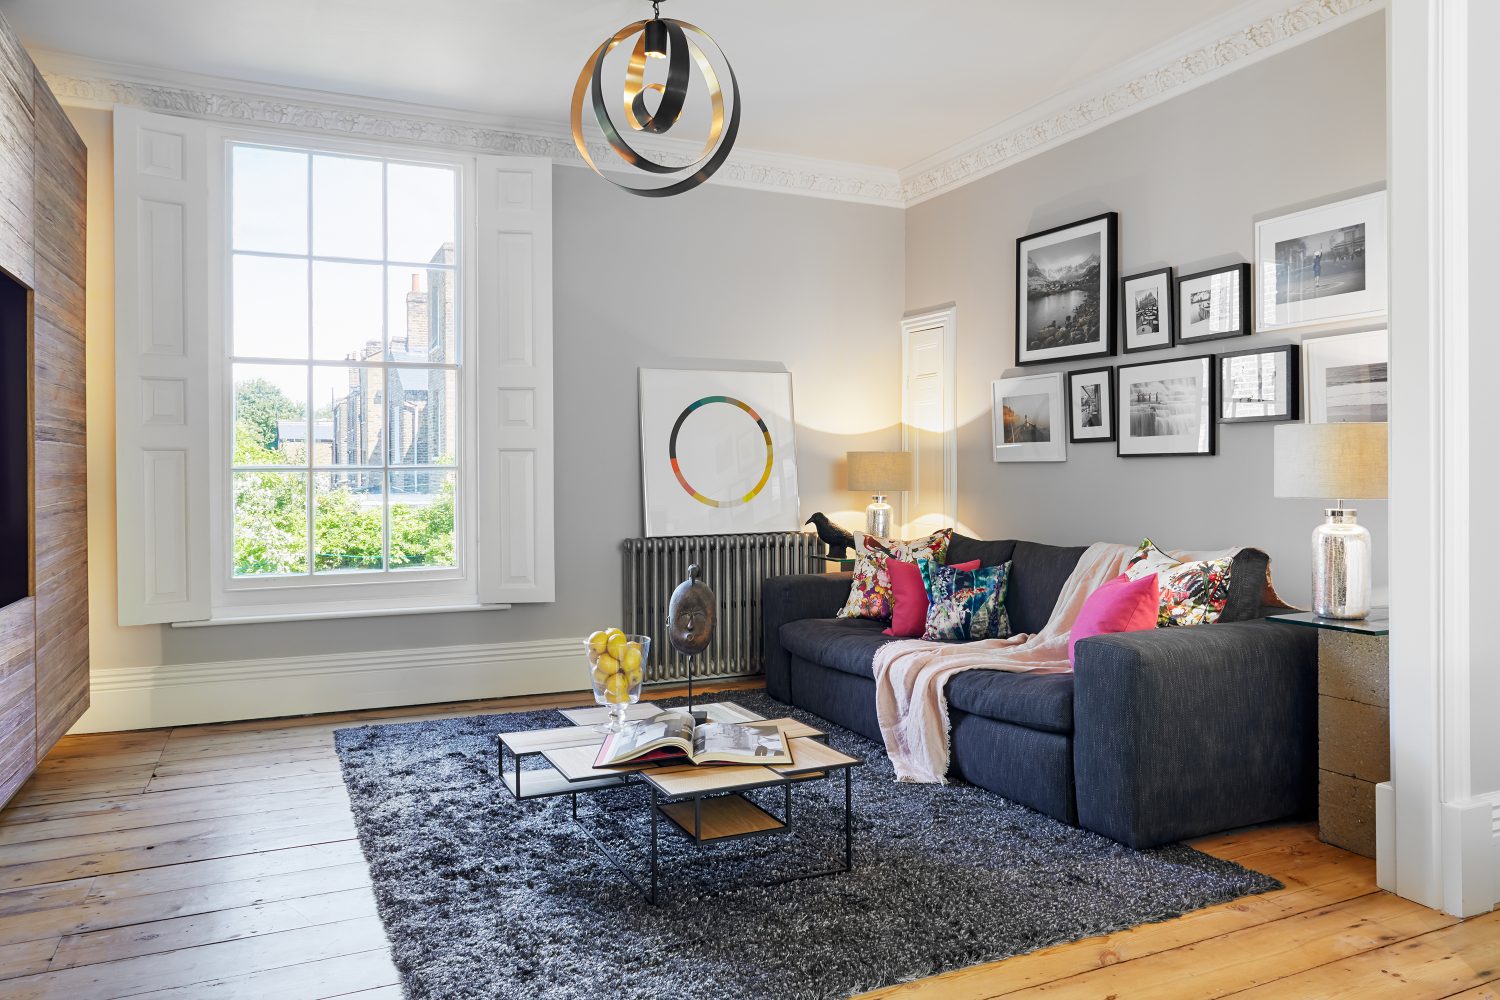 Happy House by Daniel Hopwood – light grey living room. Eclectic design